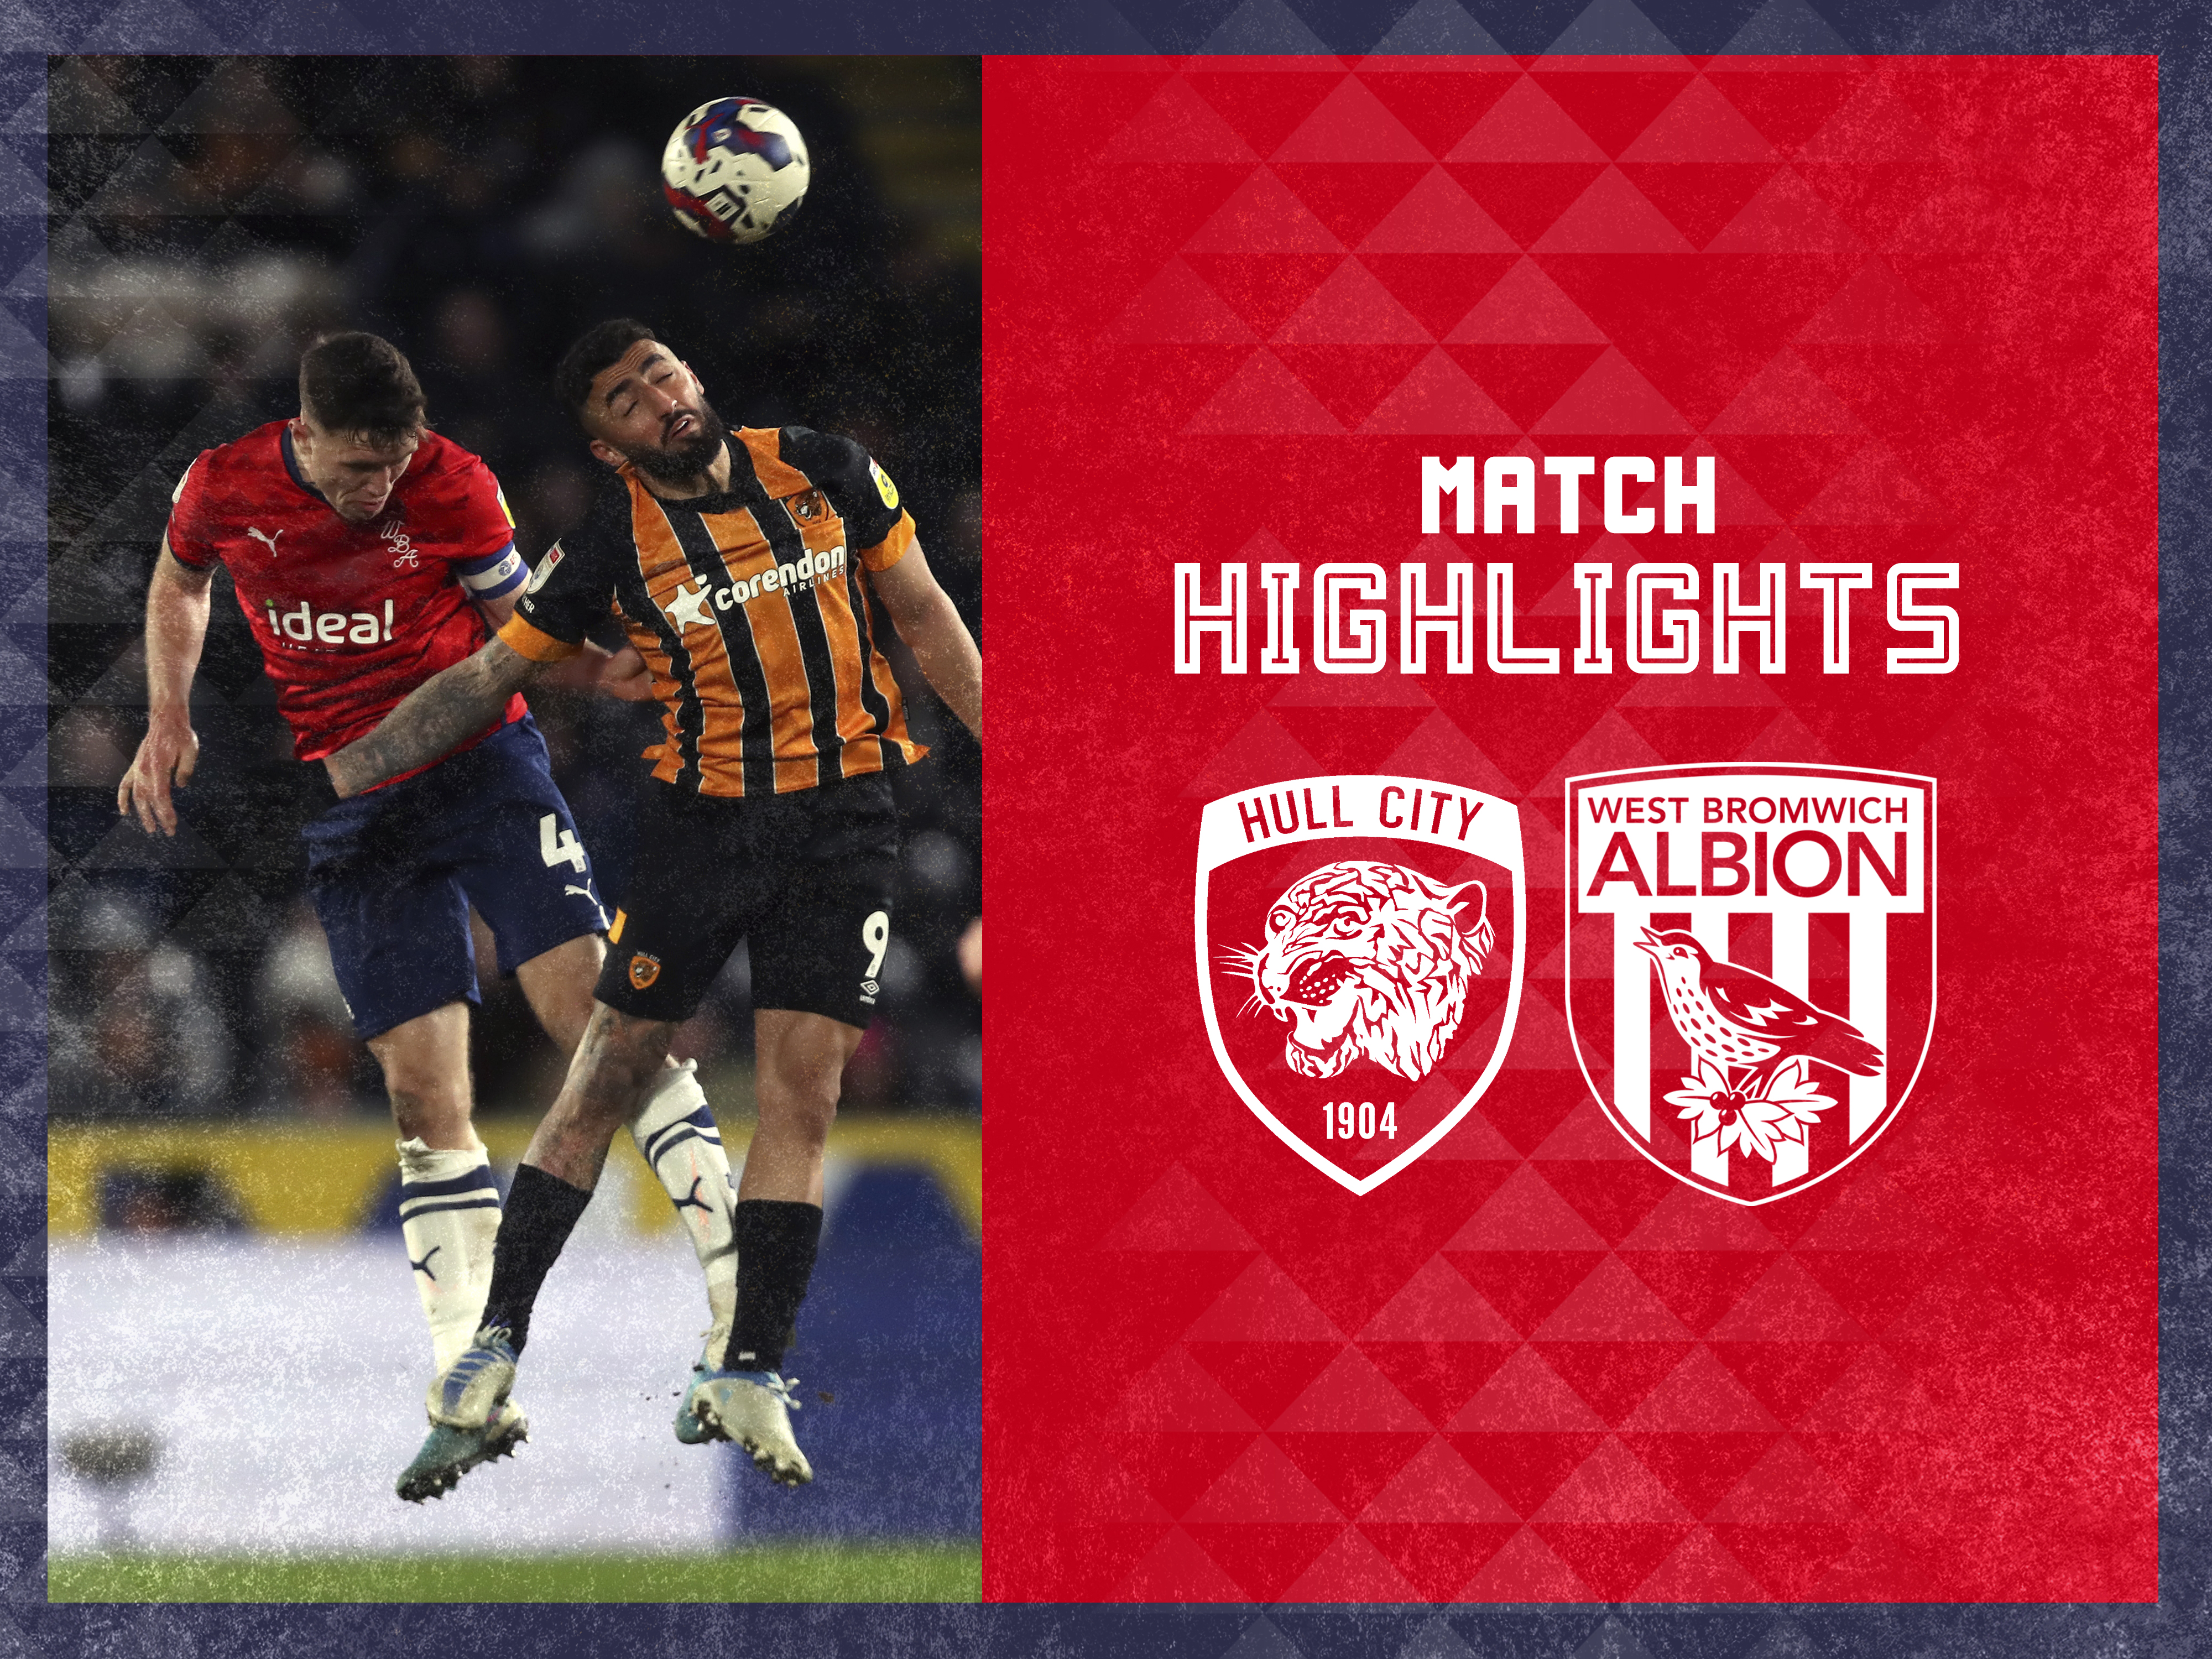 Hull City v Albion Match Highlights